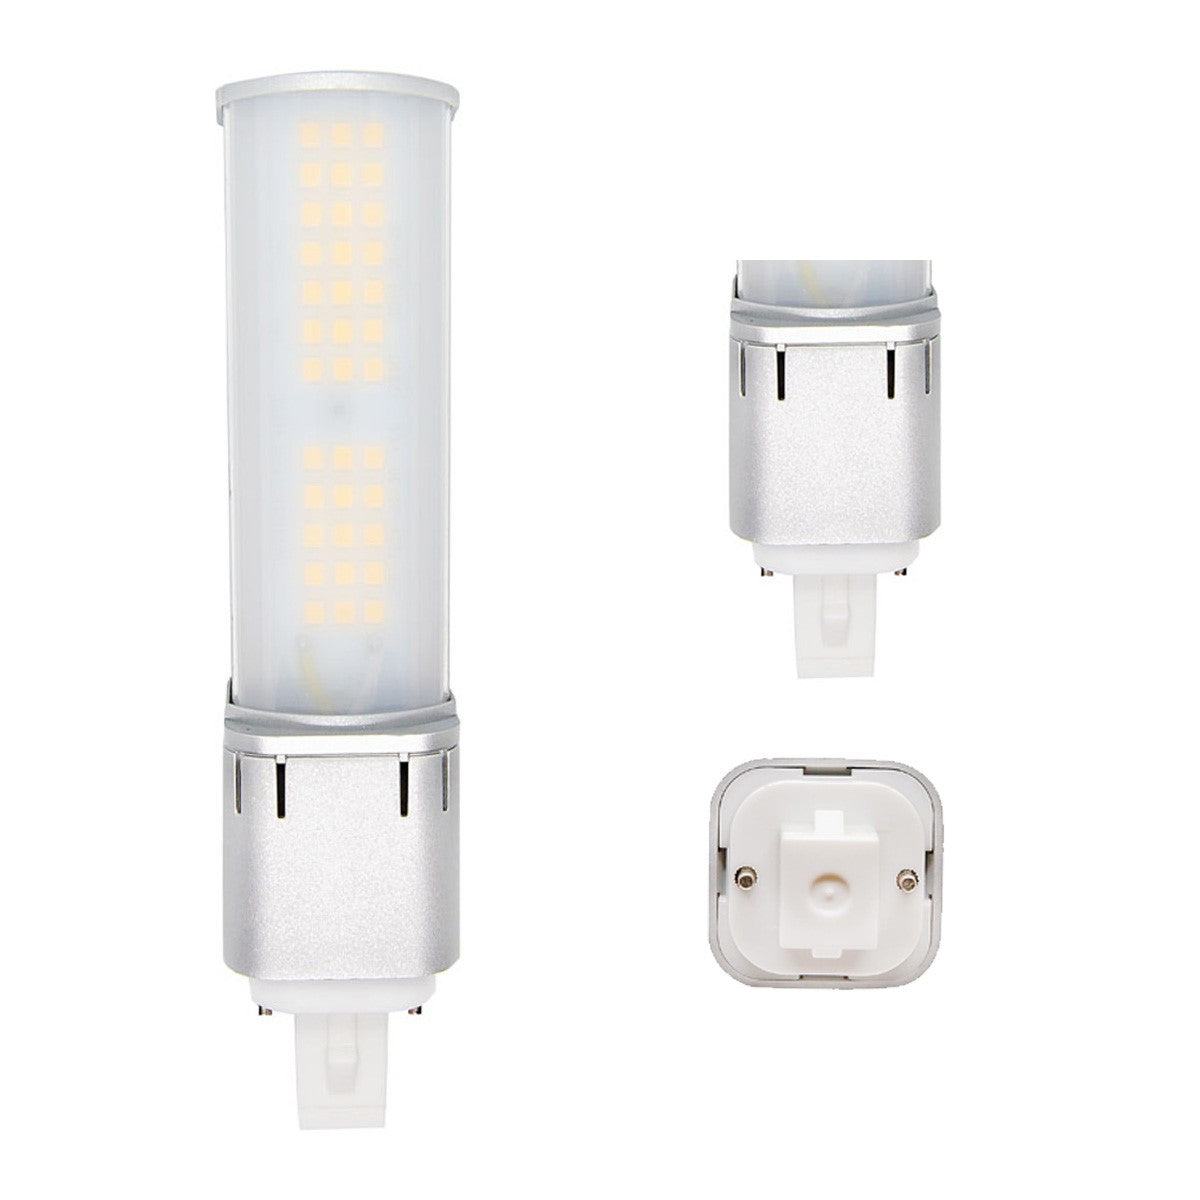 2 pin PL LED Bulb, 7 Watt 880 Lumens, 3500K, Horizontal, Replaces 13W CFL, G23 Base, Direct Or Bypass